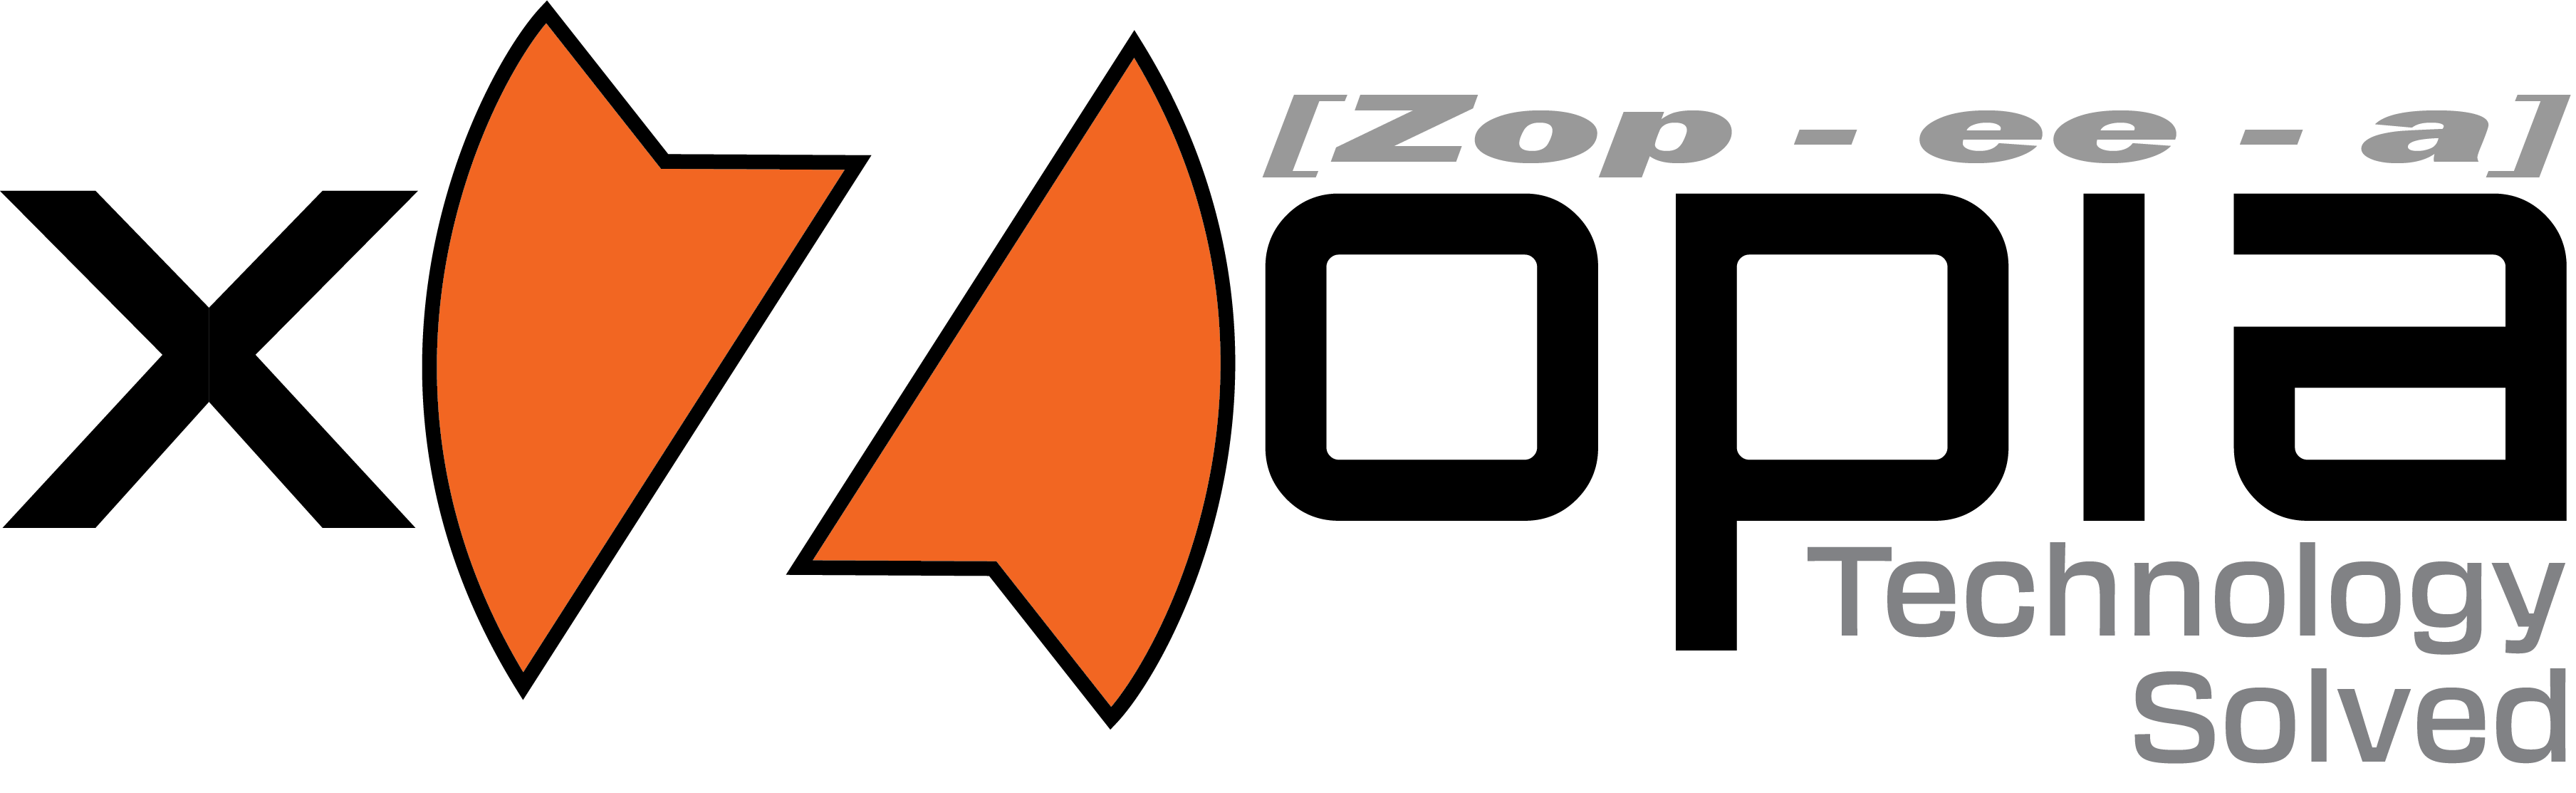 Xzopia Limited